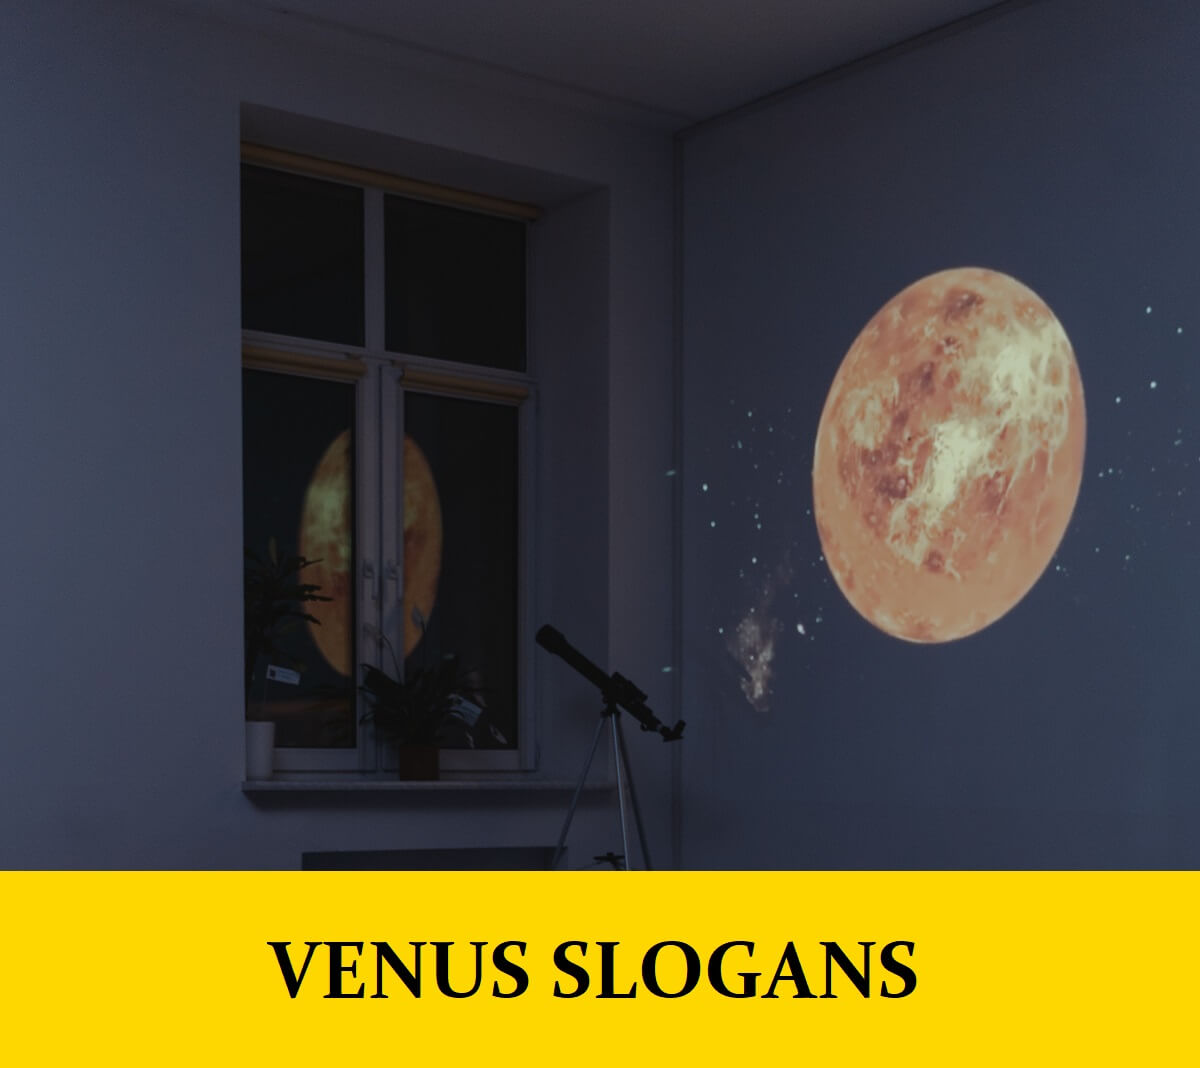 Slogans for Venus